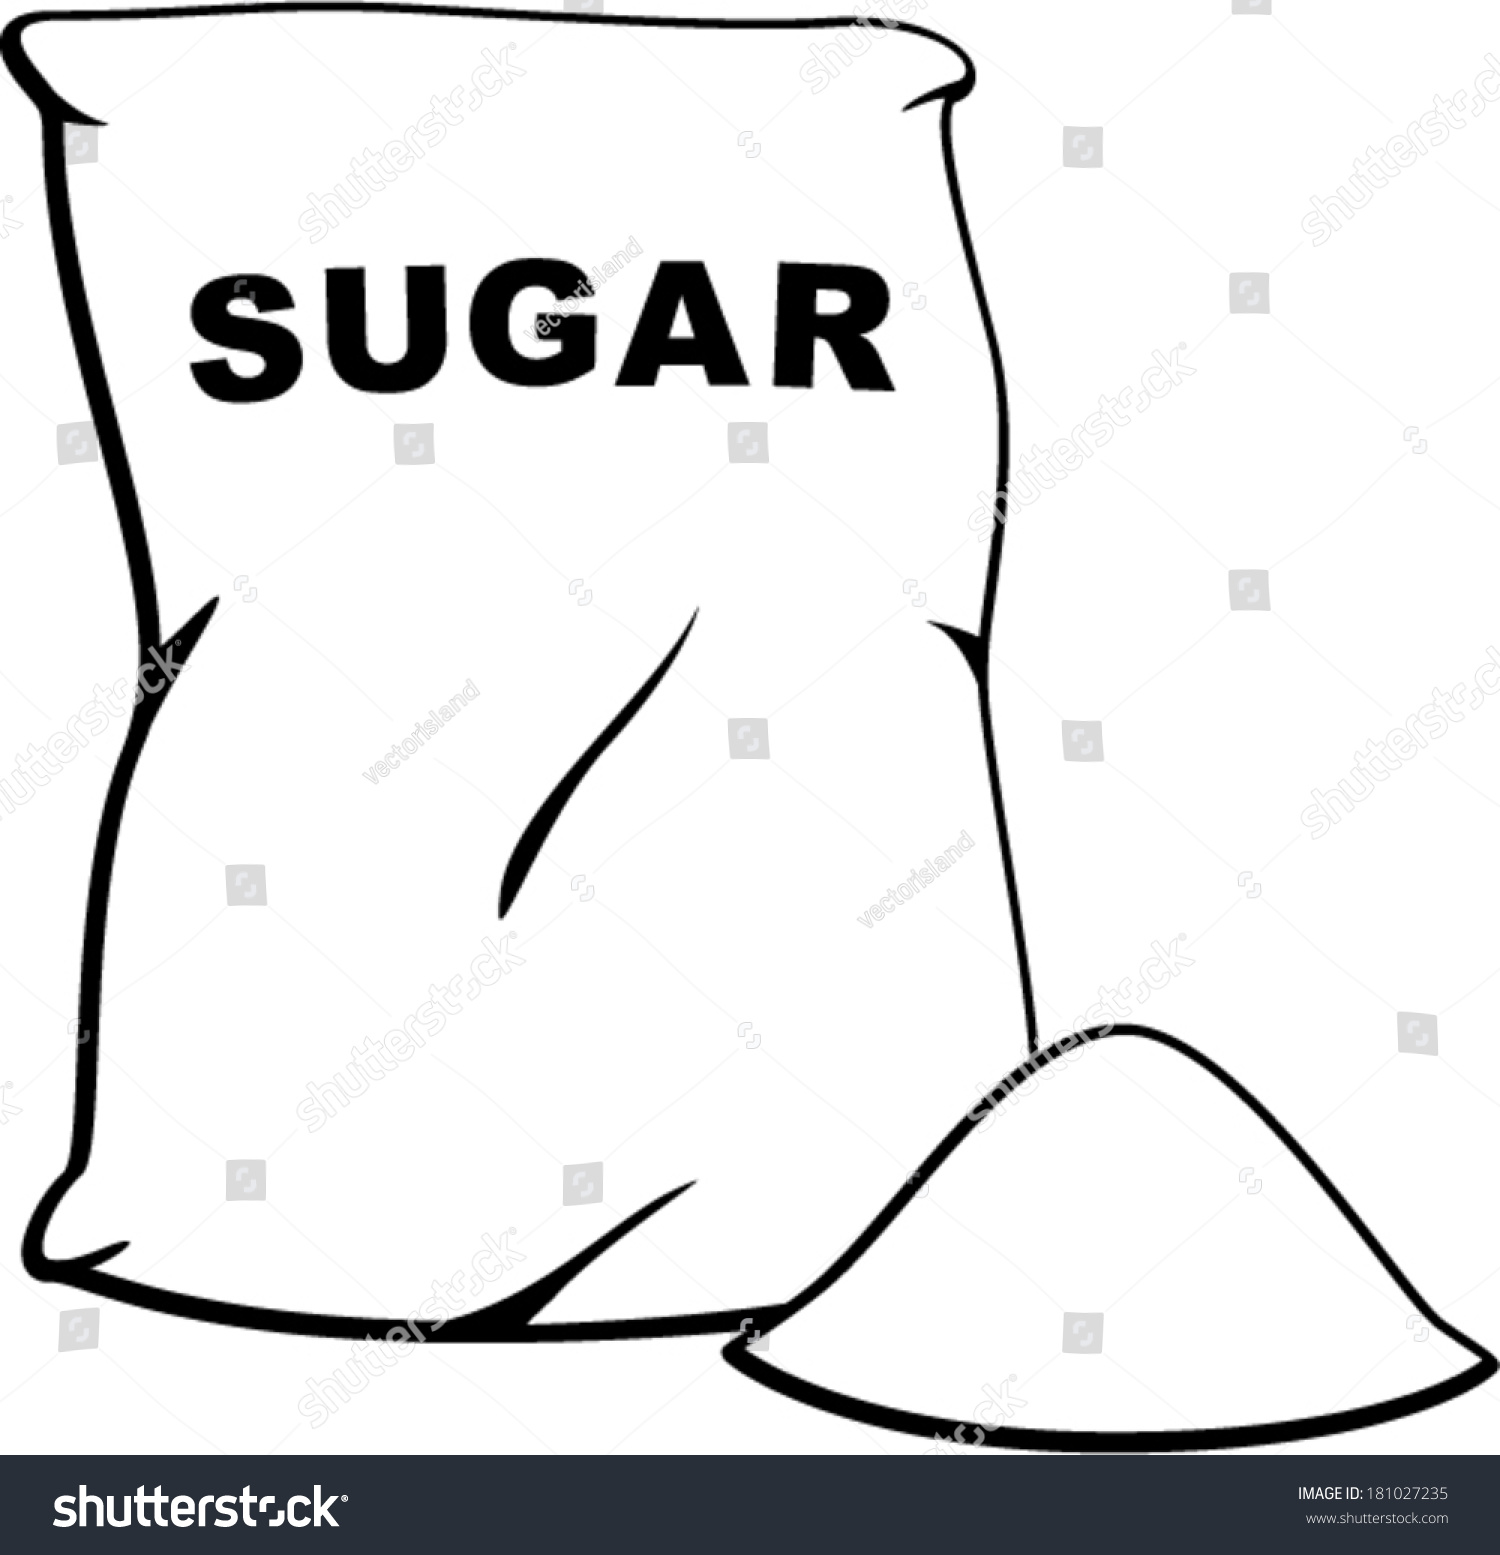 clipart bag of sugar - photo #27